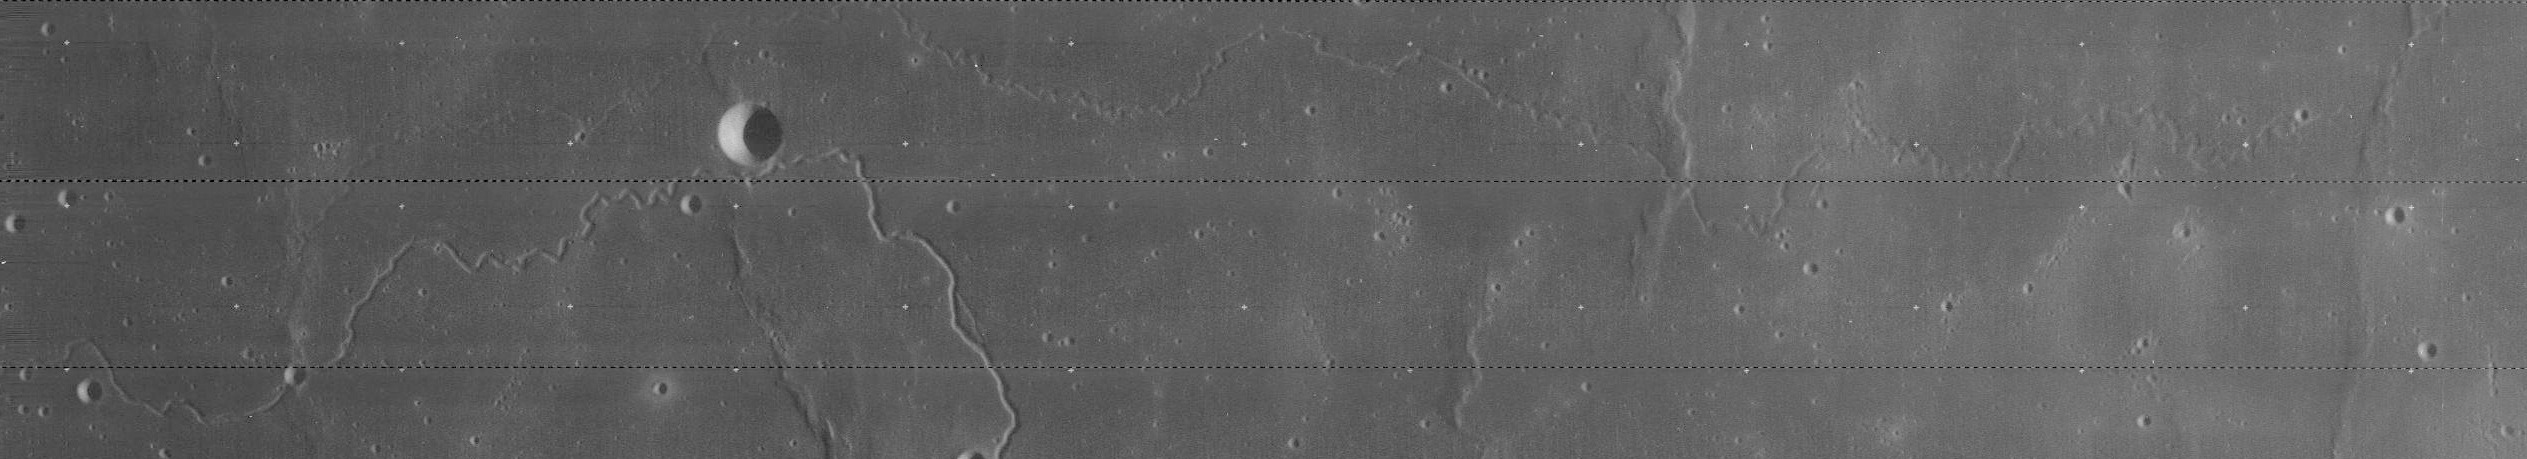 Narrow Rille near Rima Marius - Lunar Orbiter IV